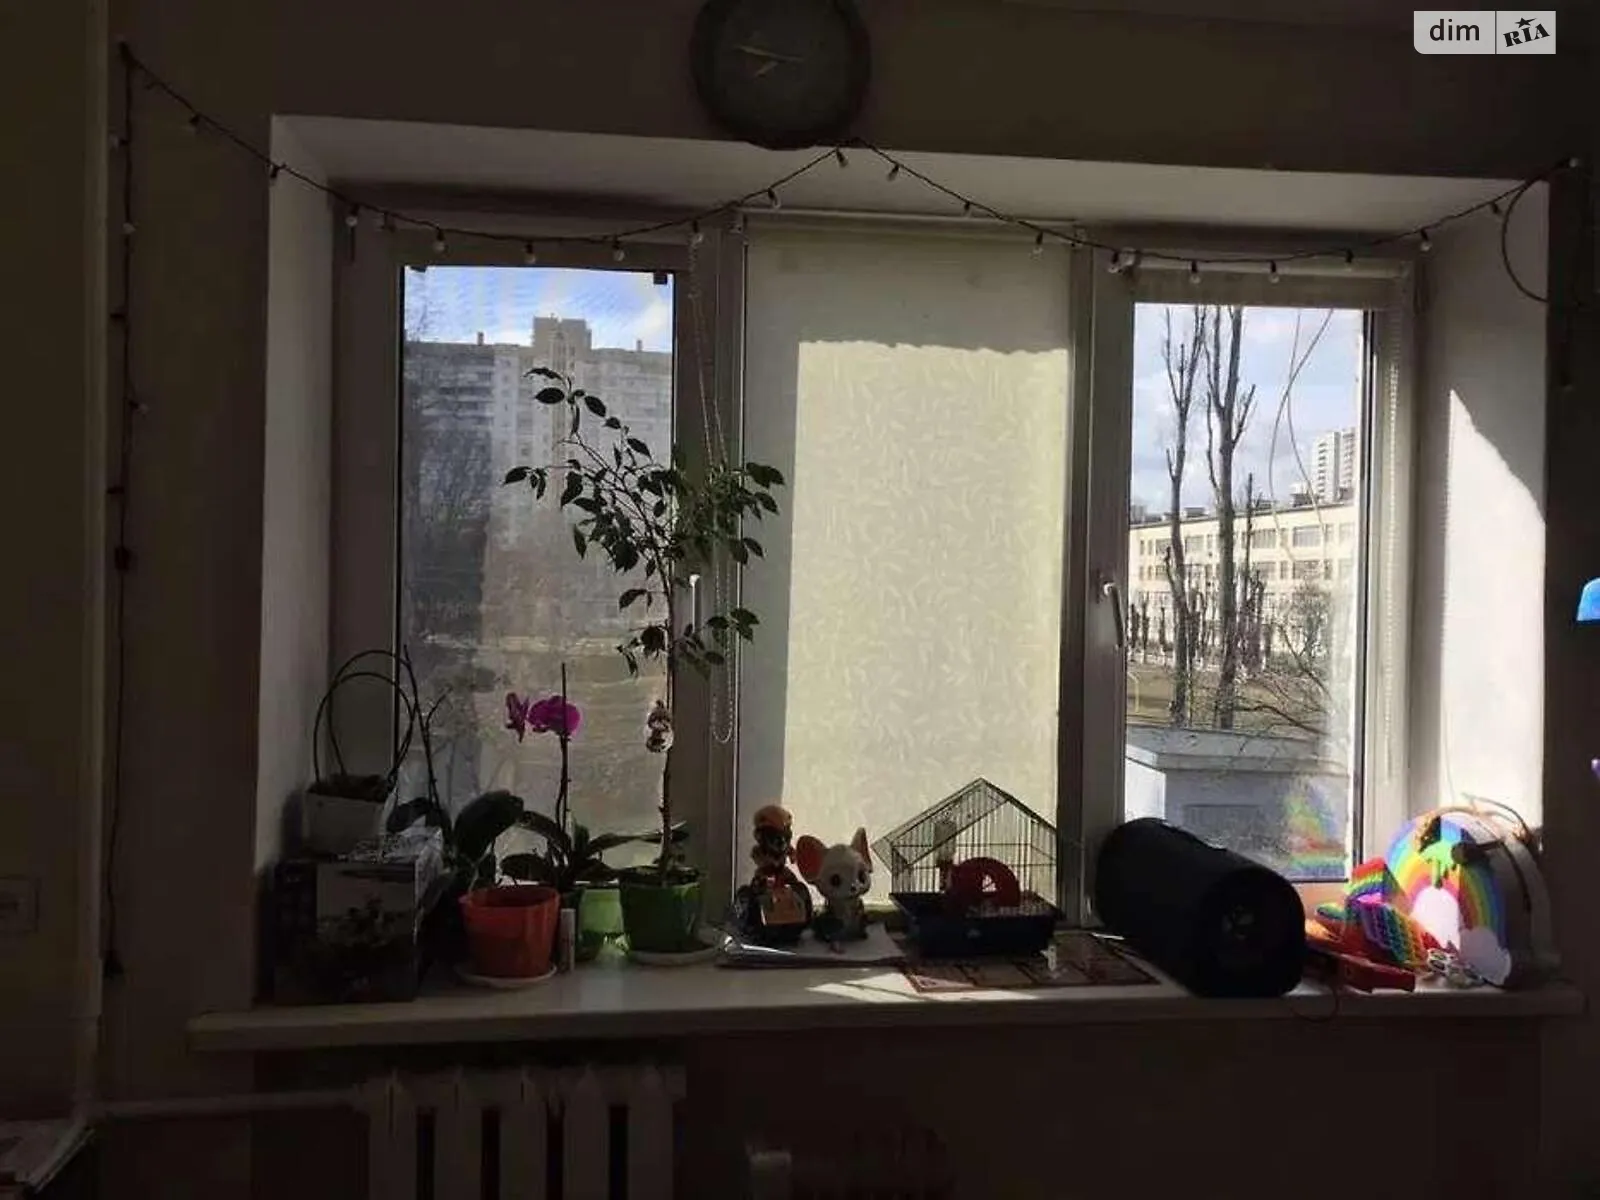 Продается комната 31 кв. м в Киеве, цена: 17000 $ - фото 1